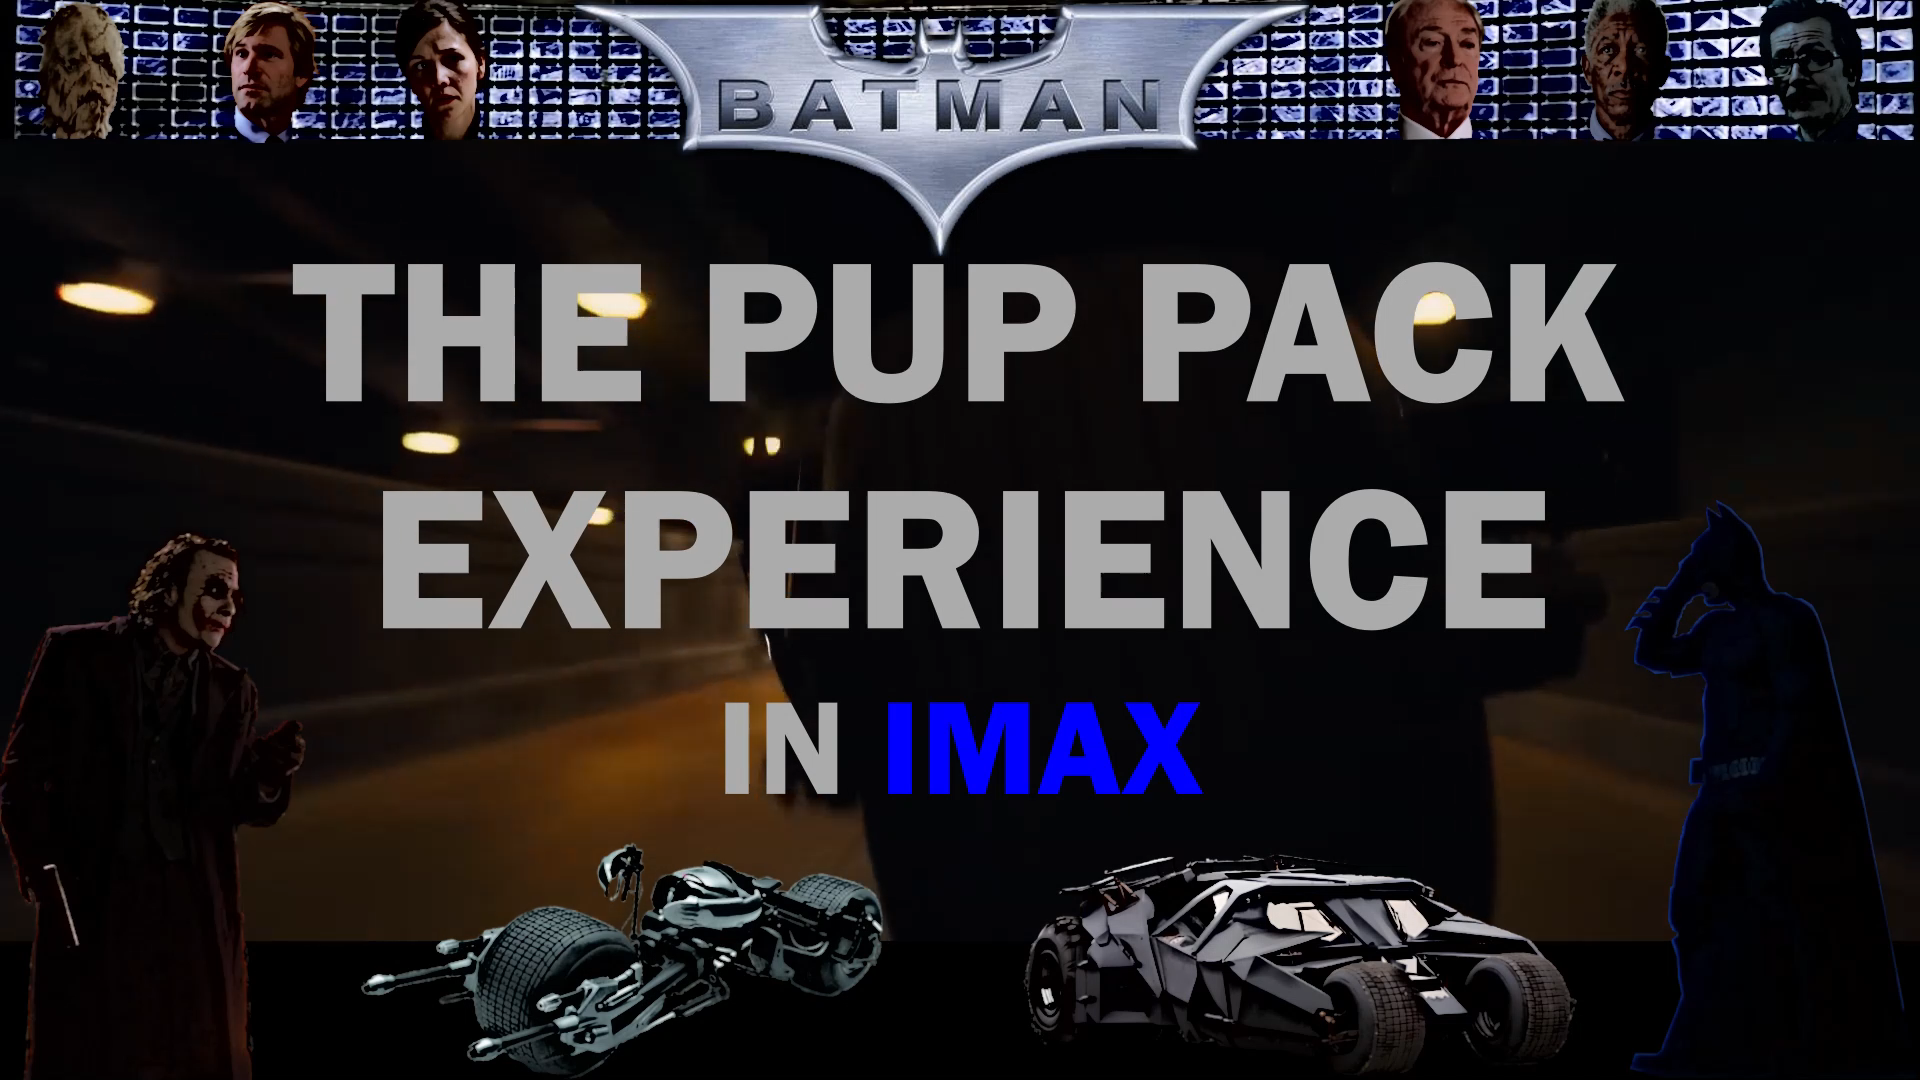 Batman: The Dark Knight Pup Pack in IMAX